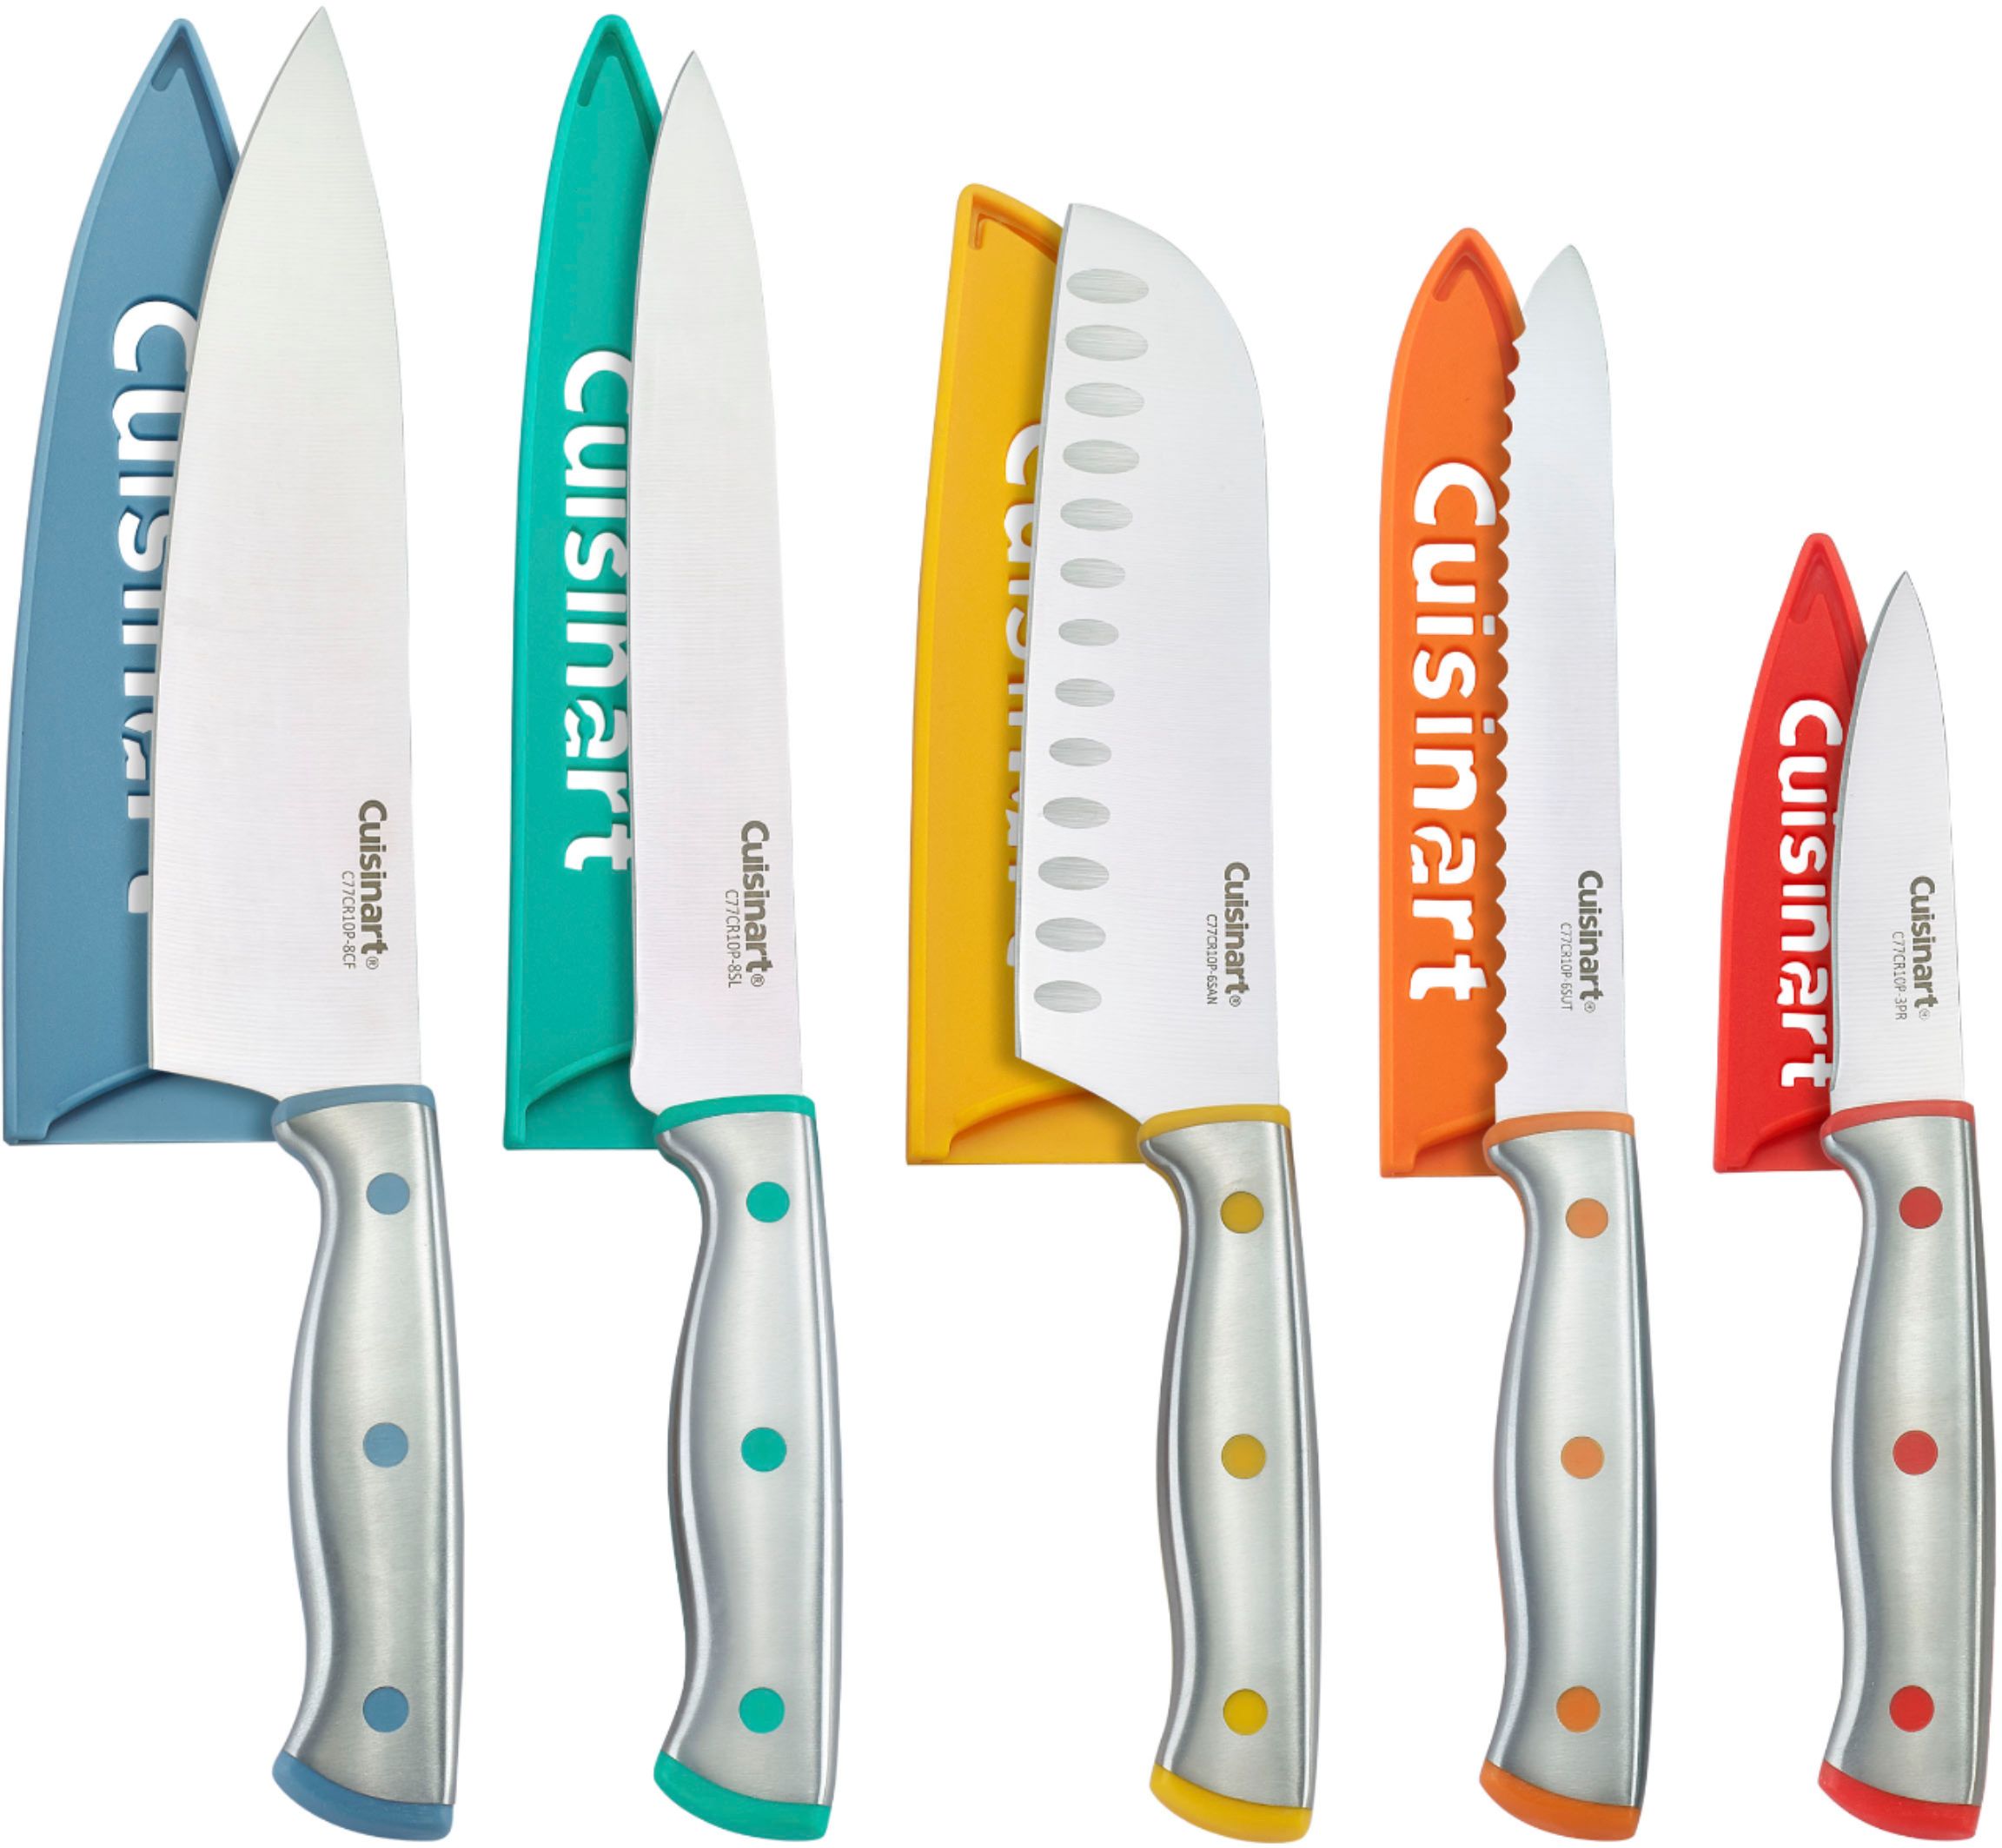 10 English Butcher Knife - Granton Edge - Premium